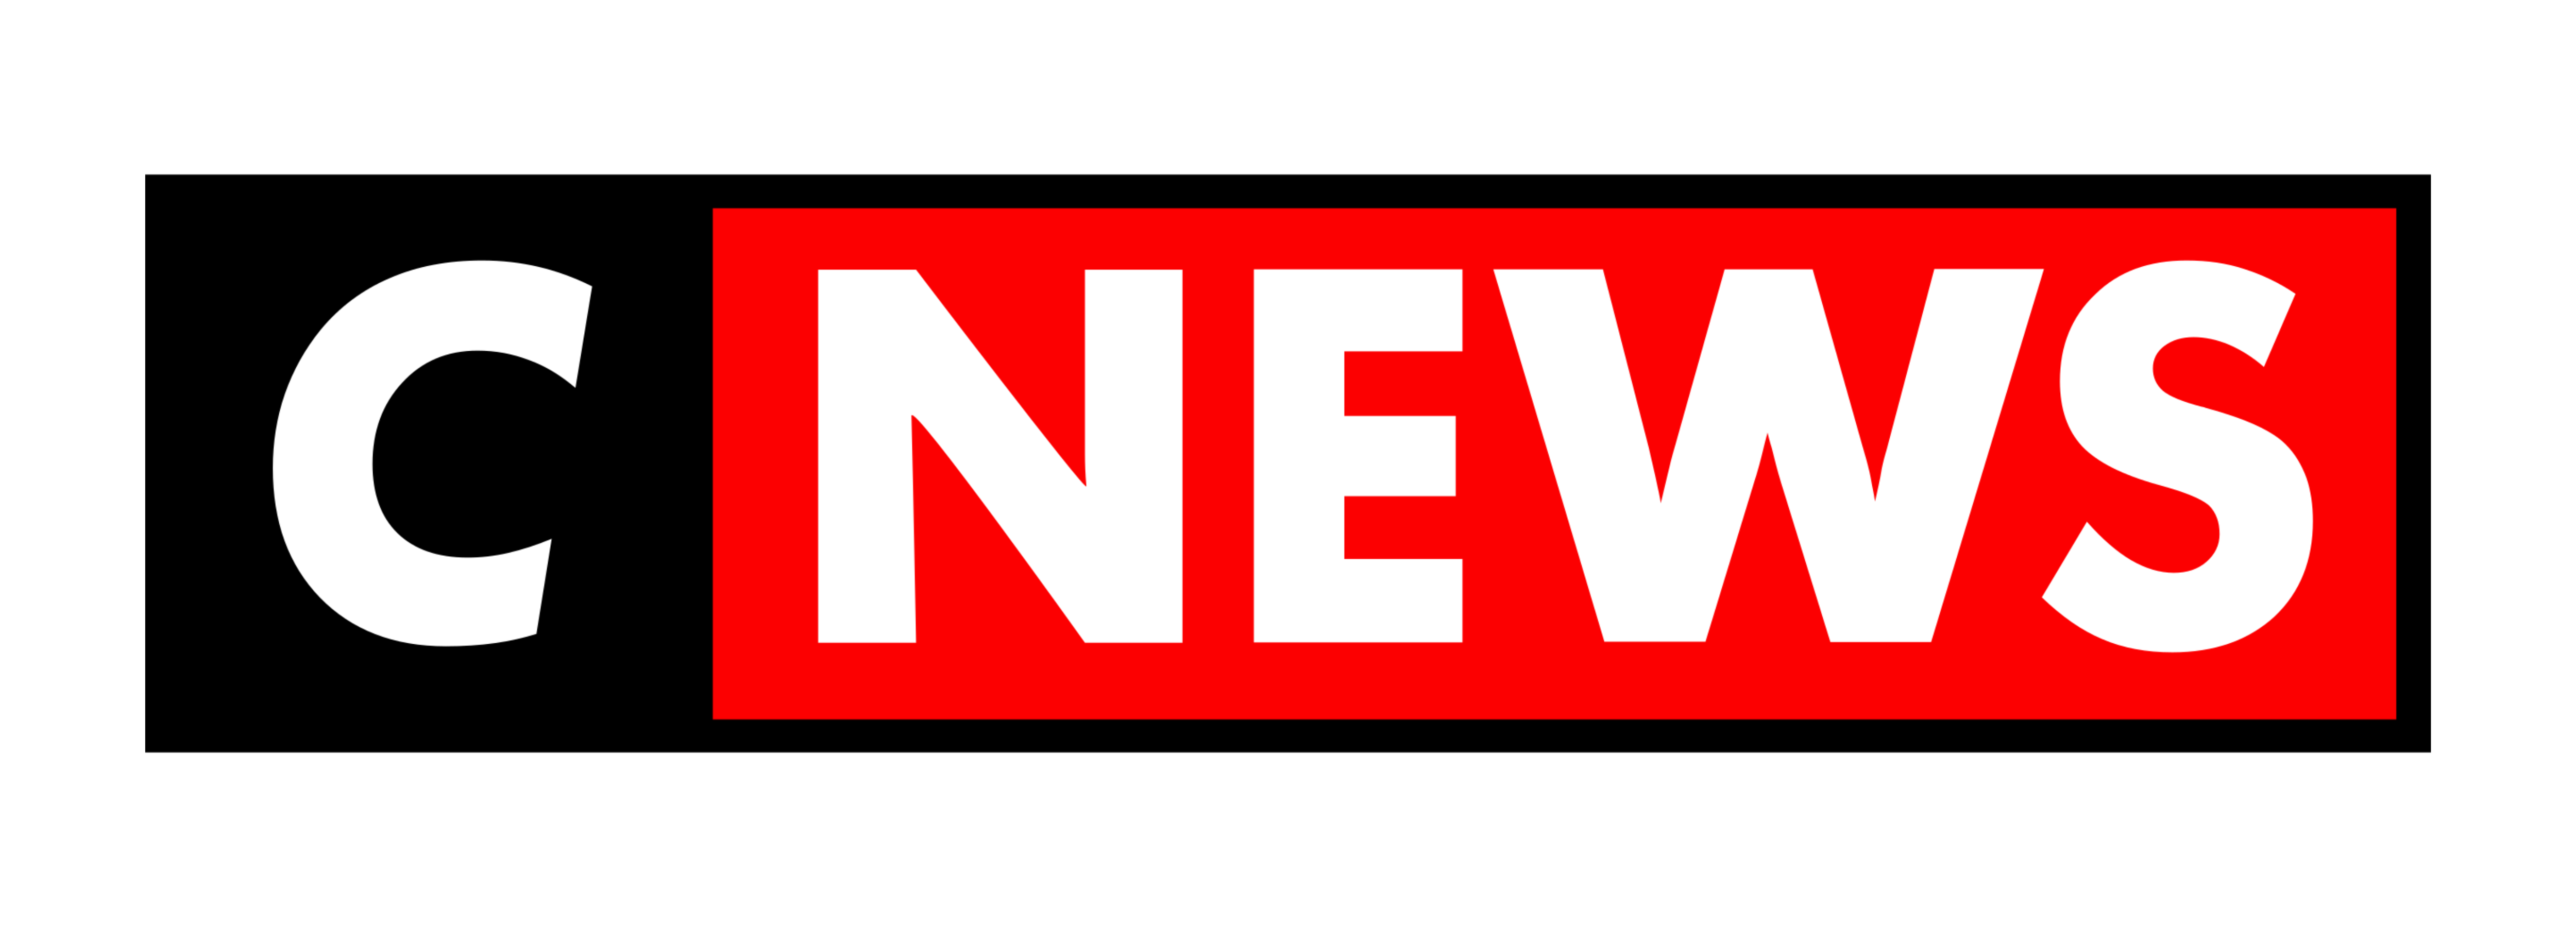 логотип cnews media